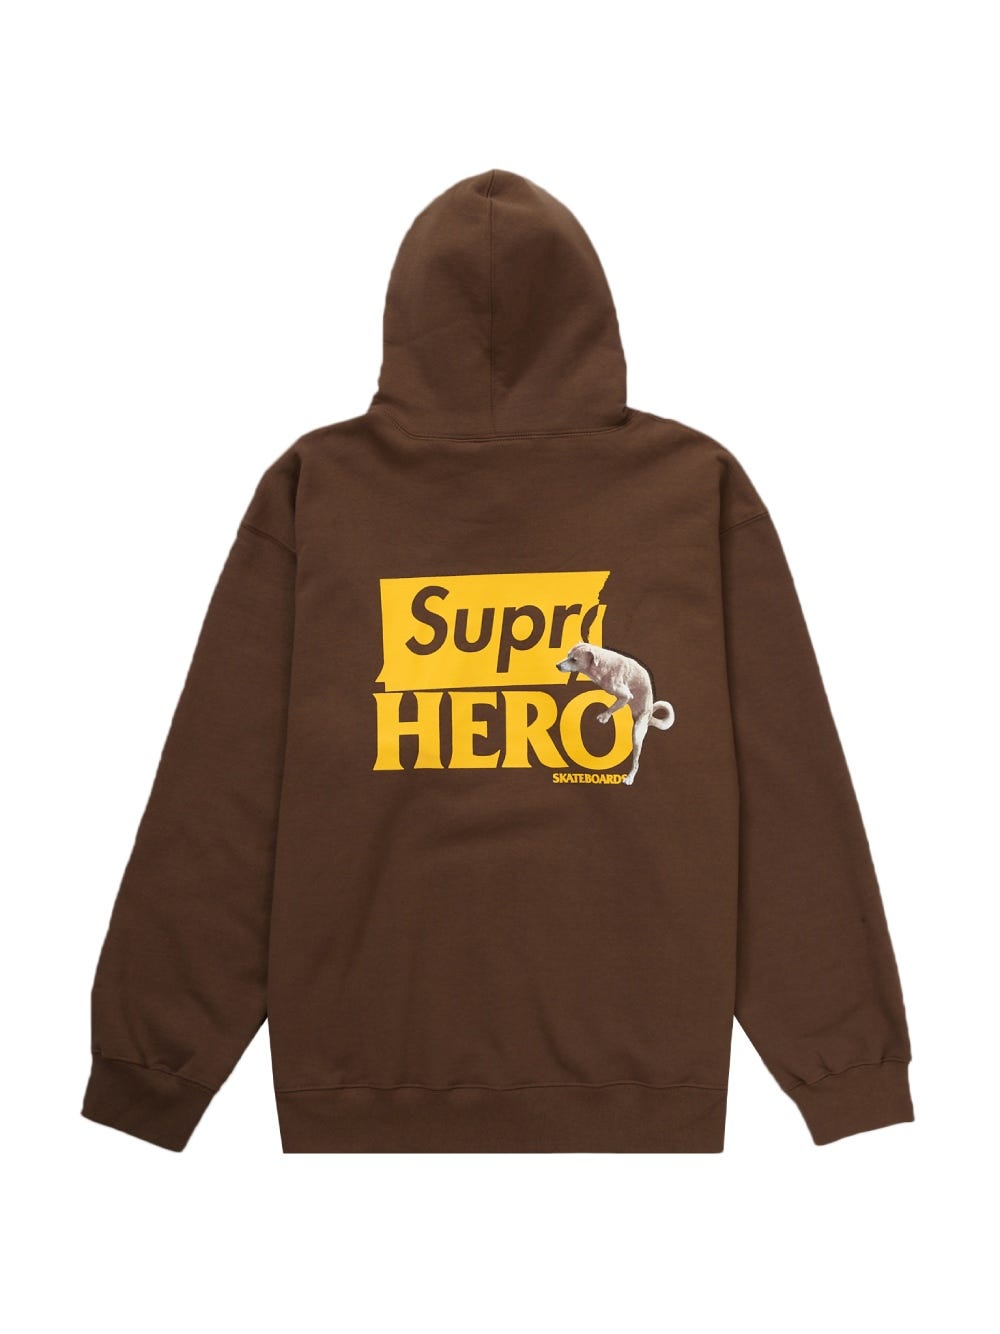 What Brand Of Supreme T-Shirt? - Supreme Hoodie - Medium